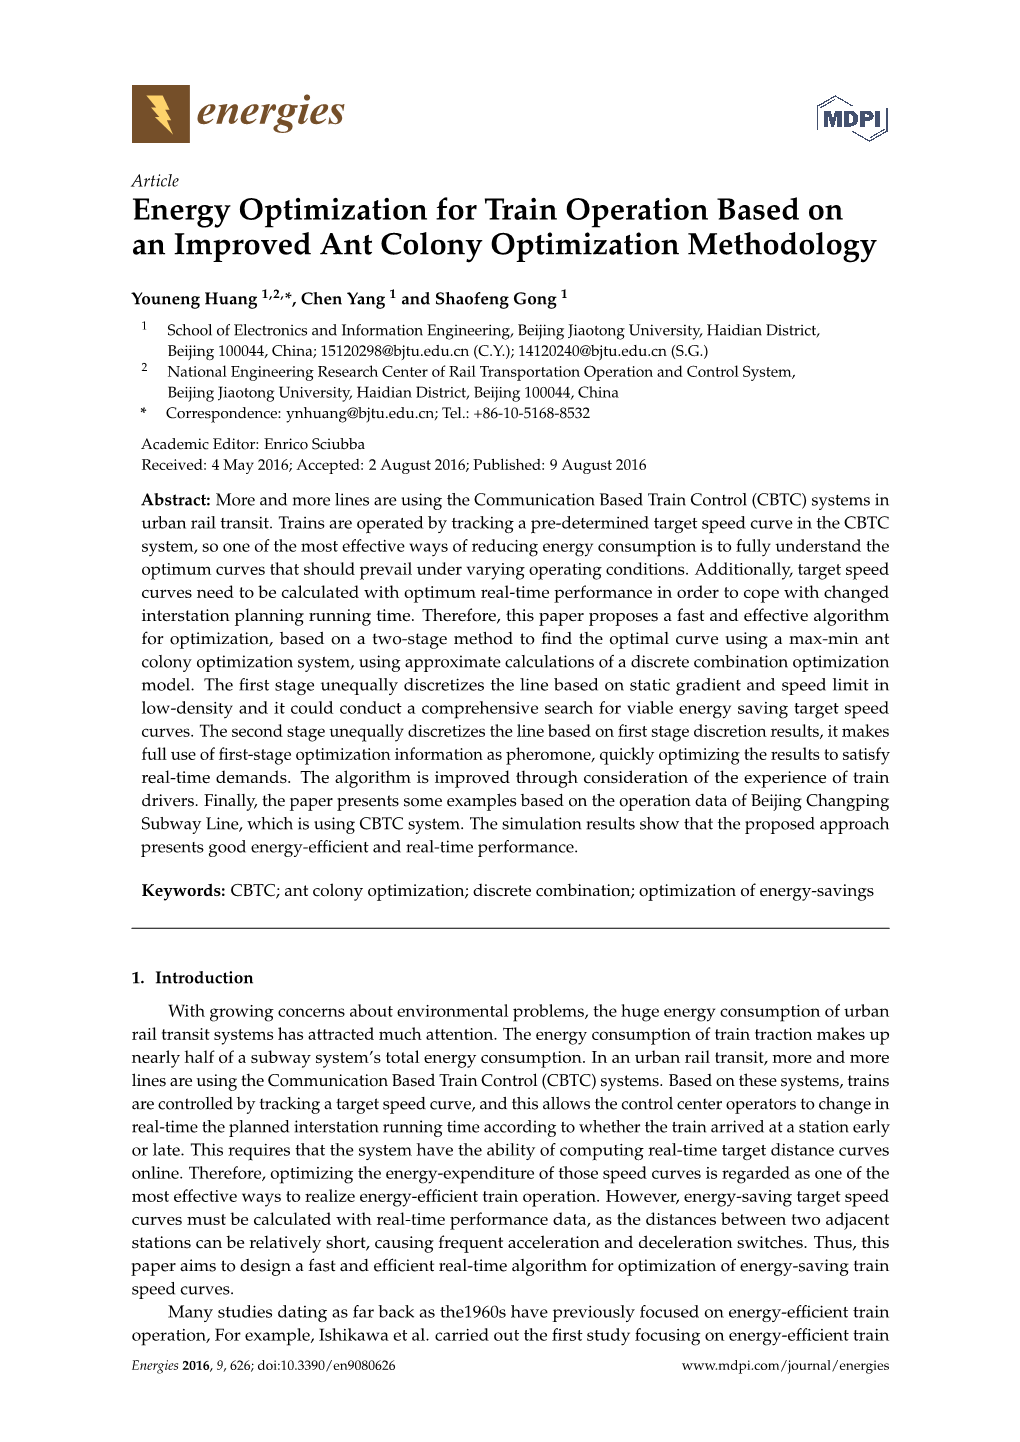 Energy Optimization for Train Operation Based on an Improved Ant Colony Optimization Methodology